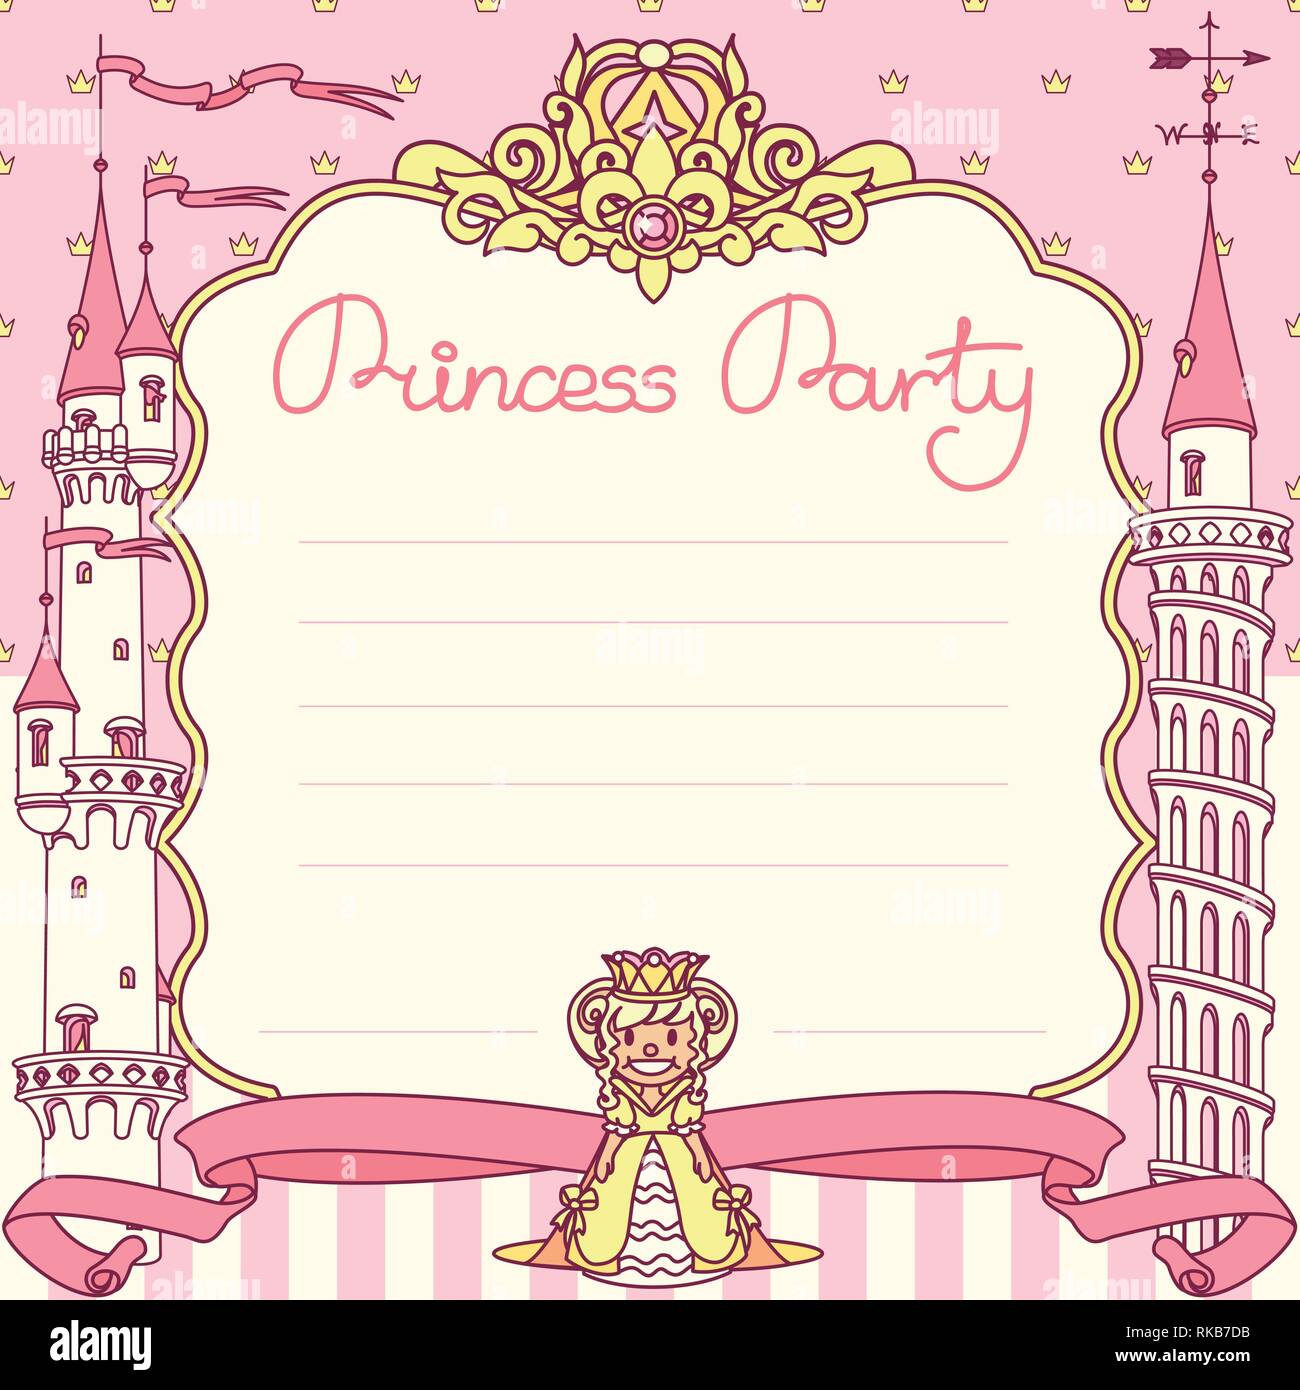 vector Princess party invitation template concept Stock Vector Art ...